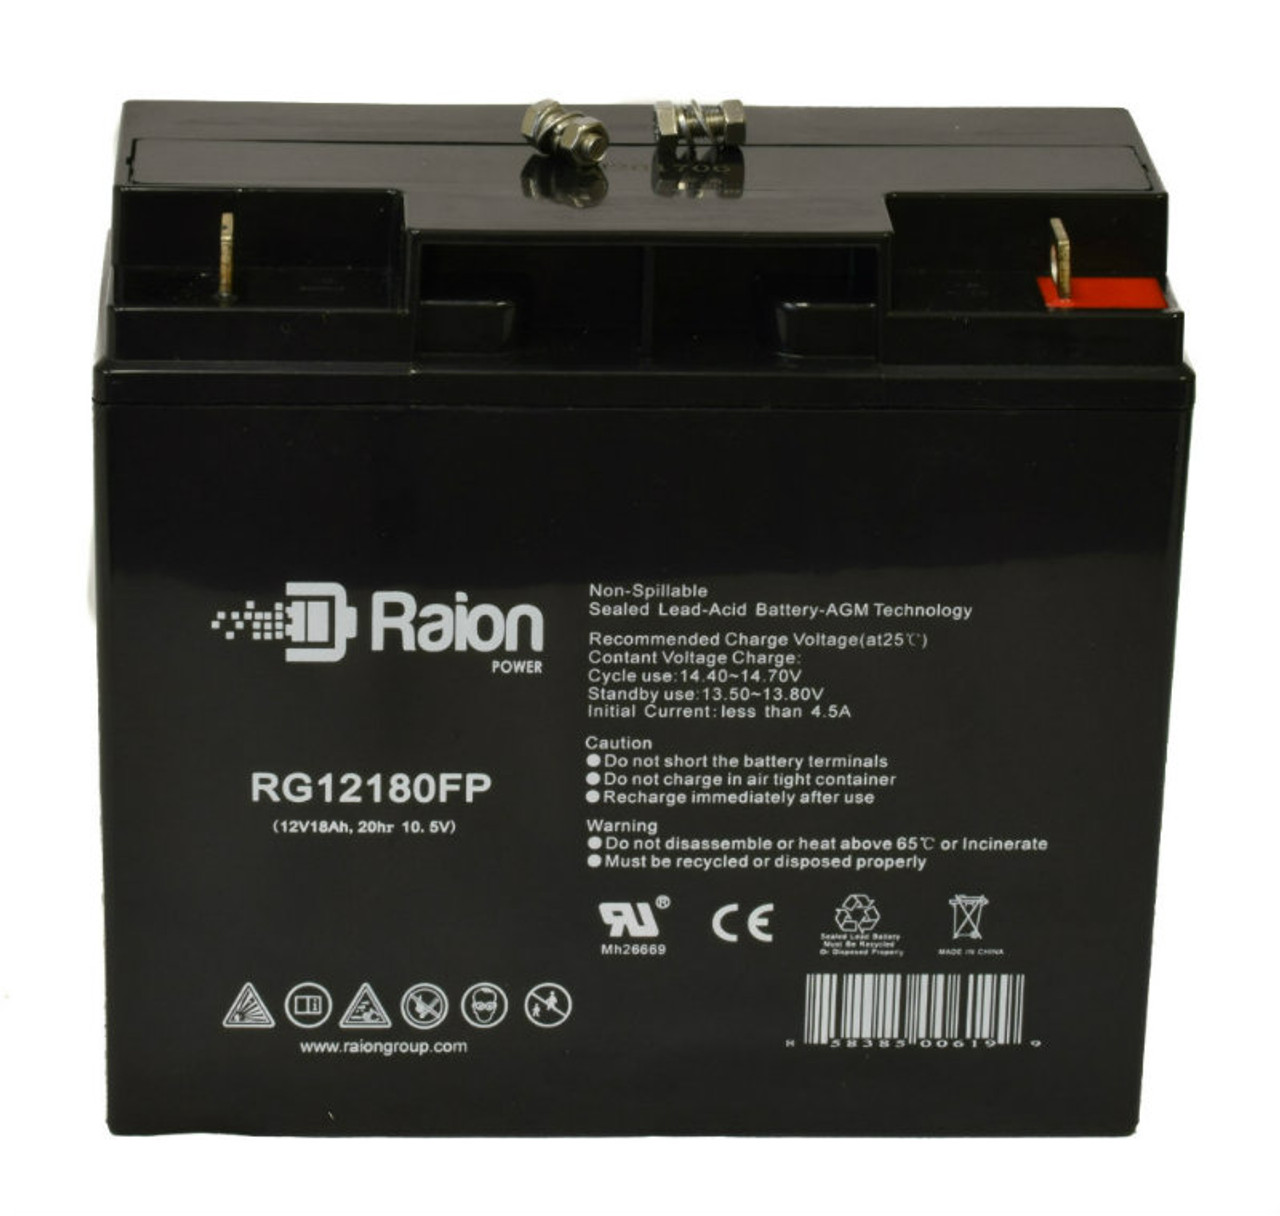 Raion Power RG12180FP 12V 18Ah Lead Acid Battery for Sonnenschein 0889556500